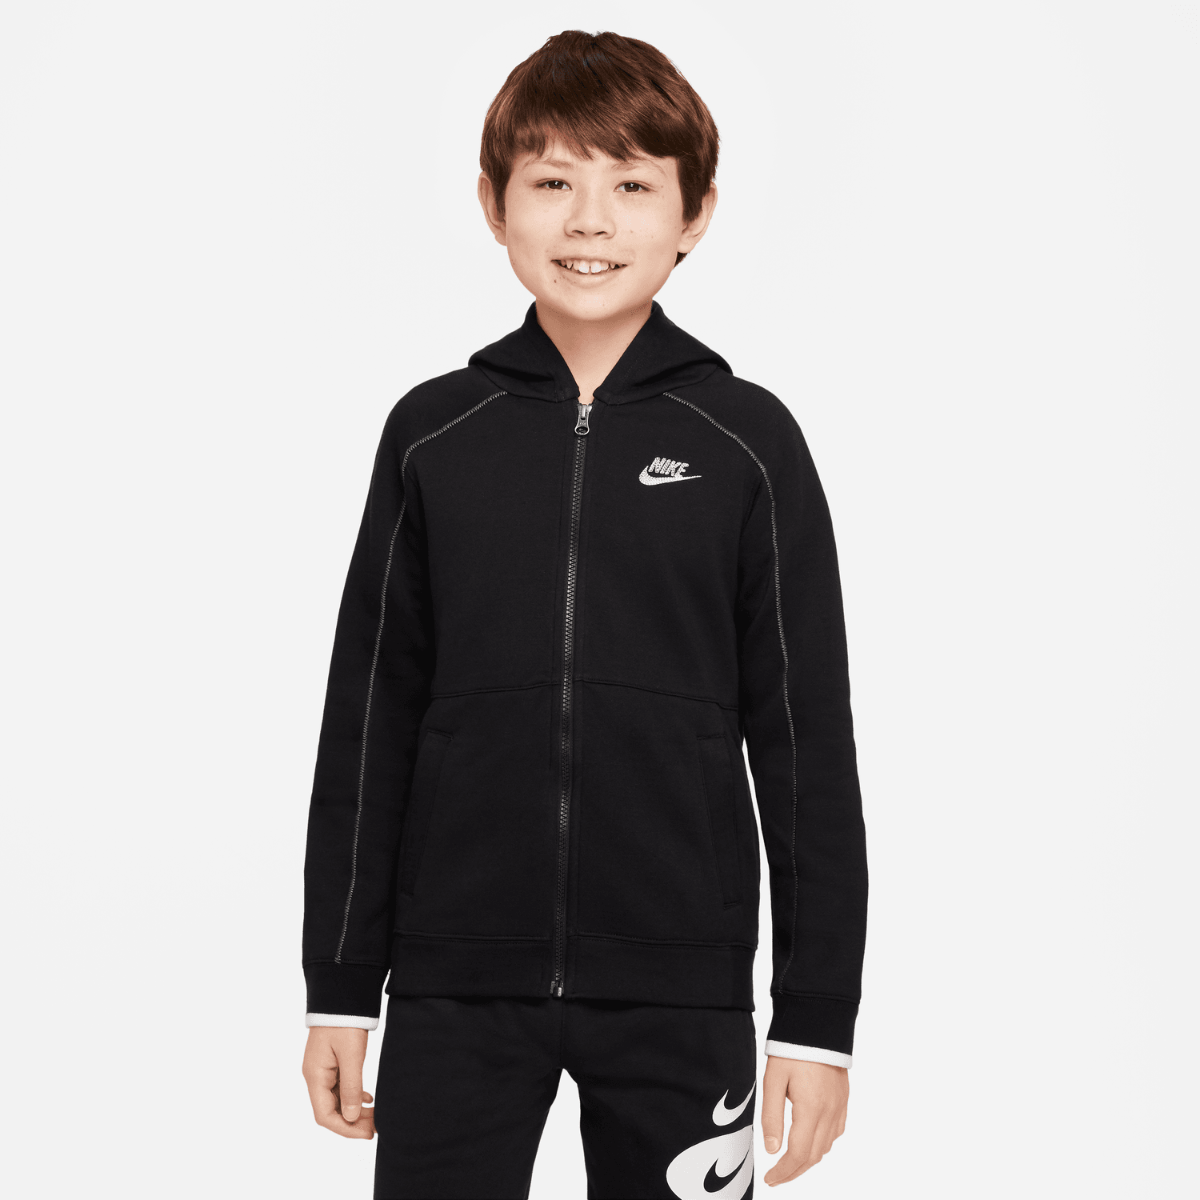 Nike Amplify Junior Jacket - Black